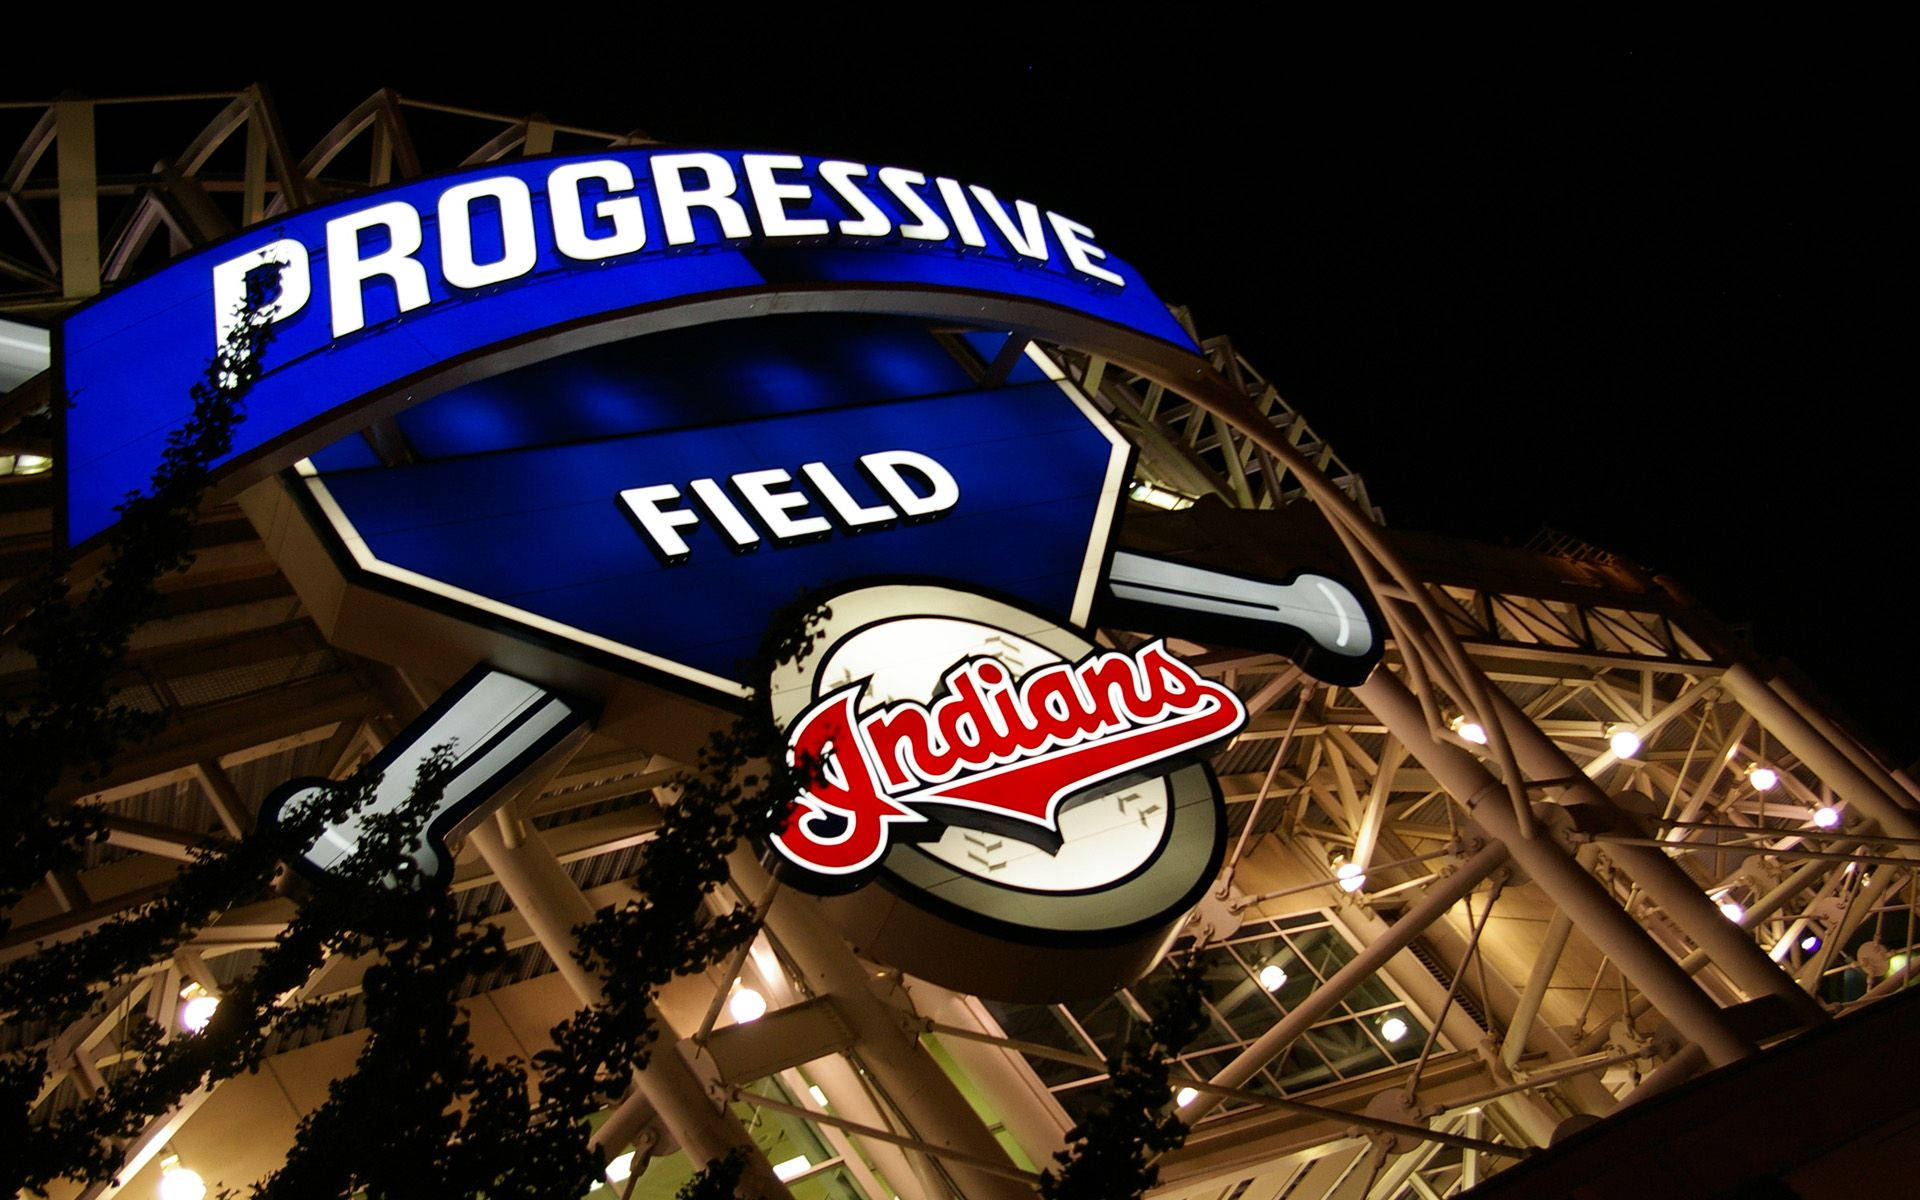 Cleveland Indians Progressive Field Entrance Background